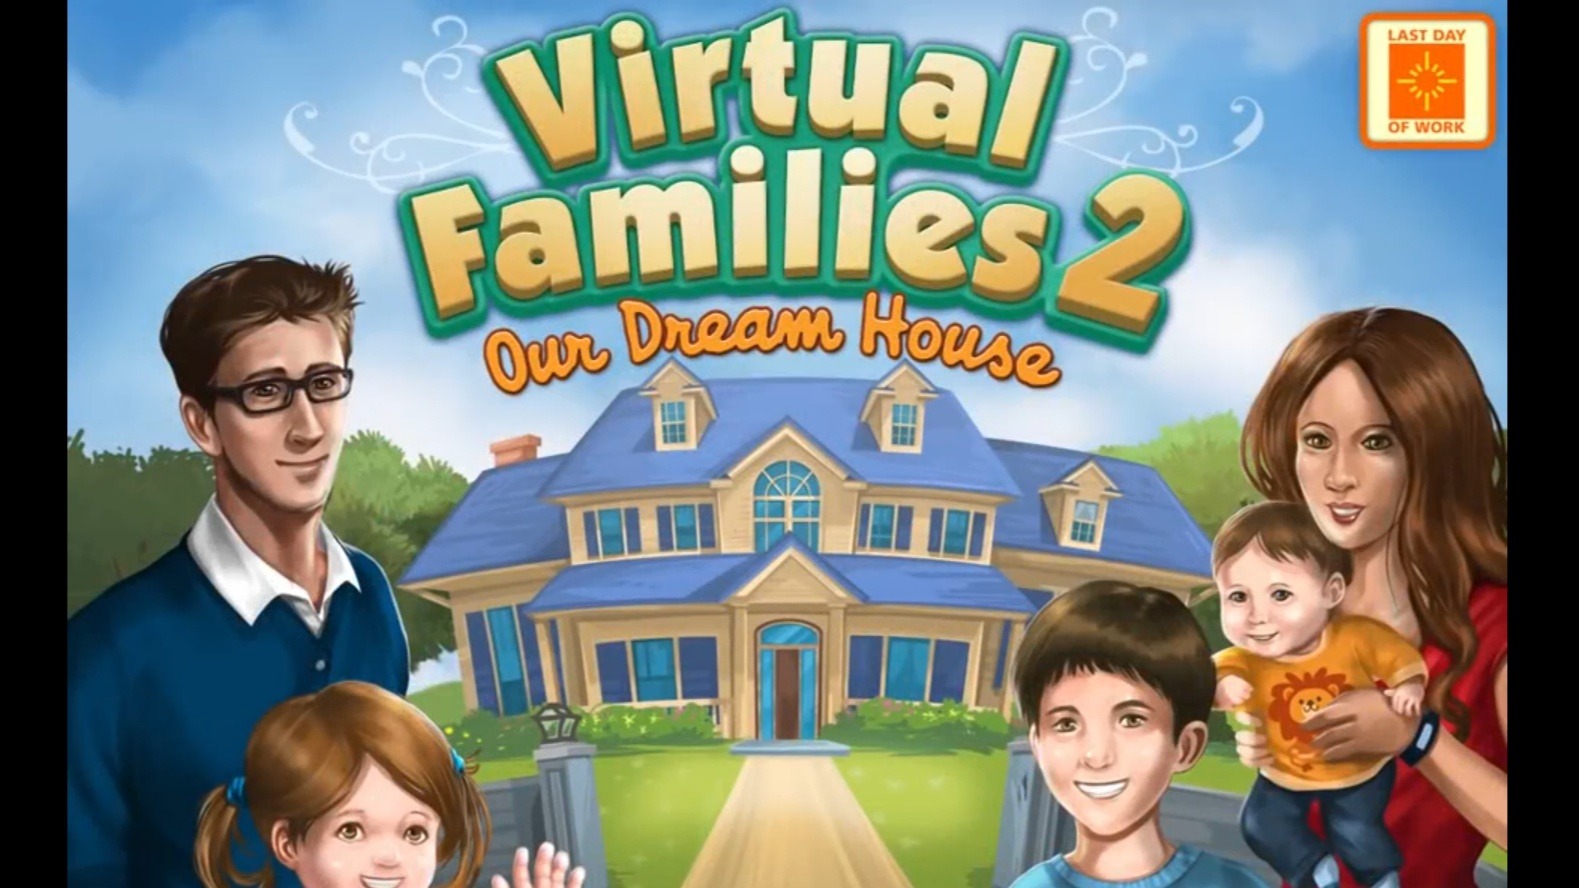 virtual families 2 hints